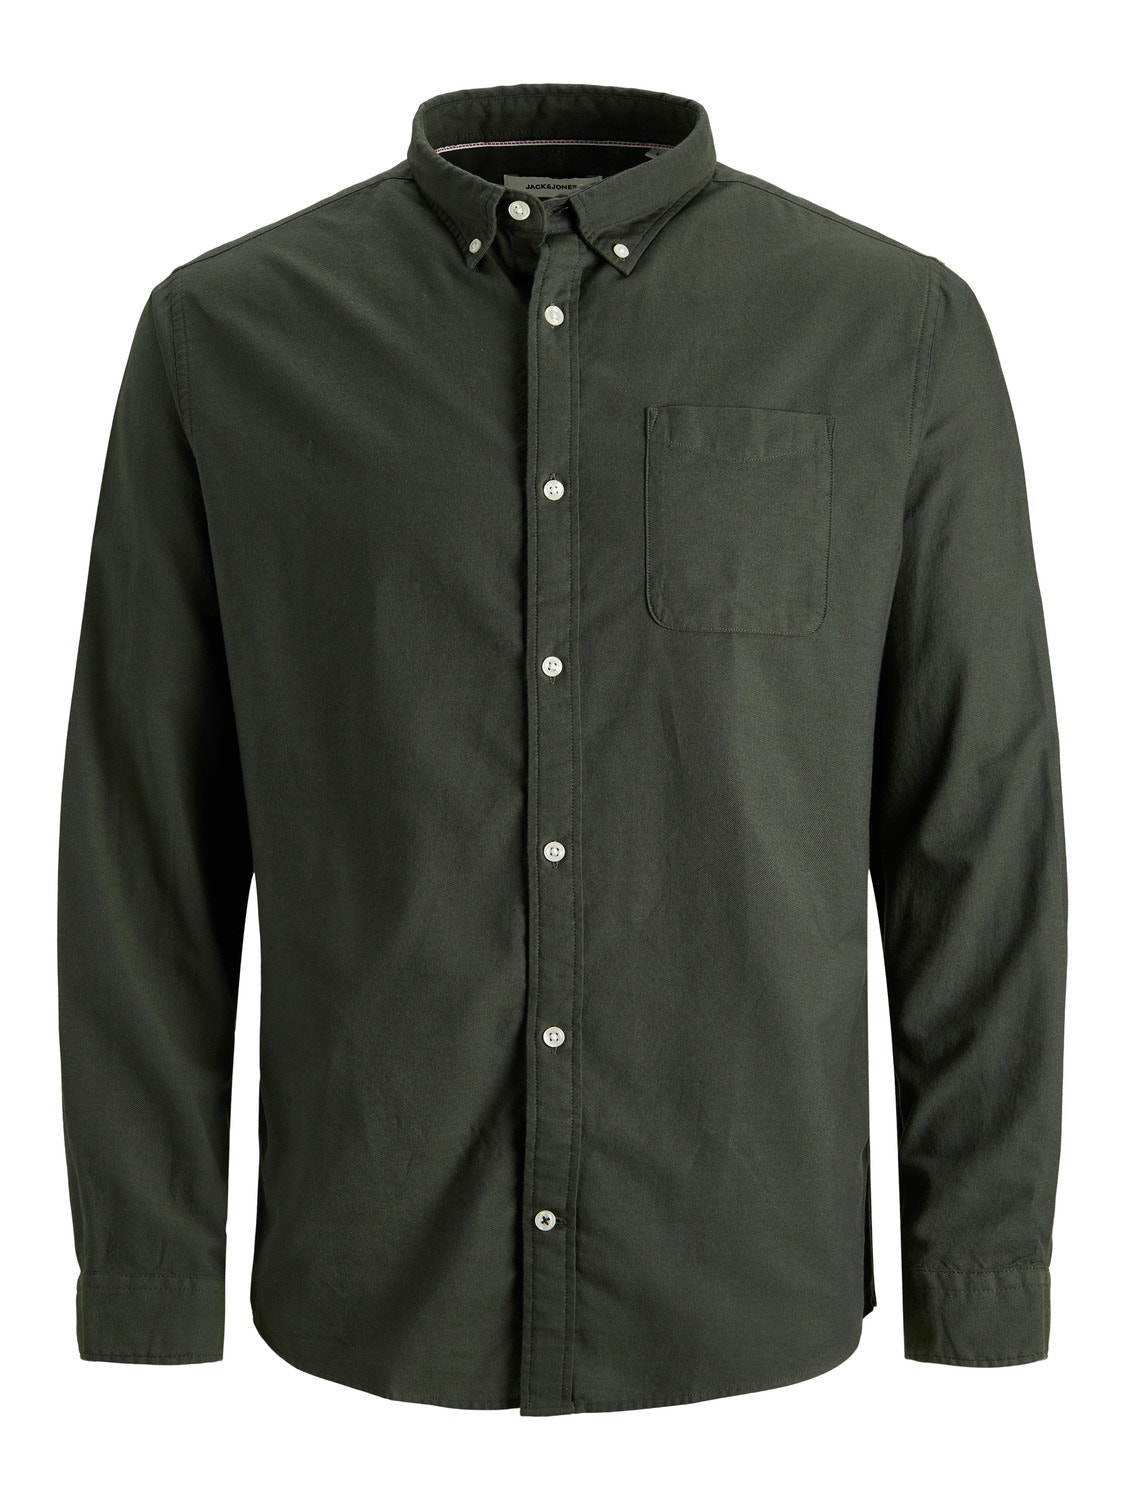 Jack & Jones Plus Size Camisa Casual Slim Fit -Forest Night - 12190444